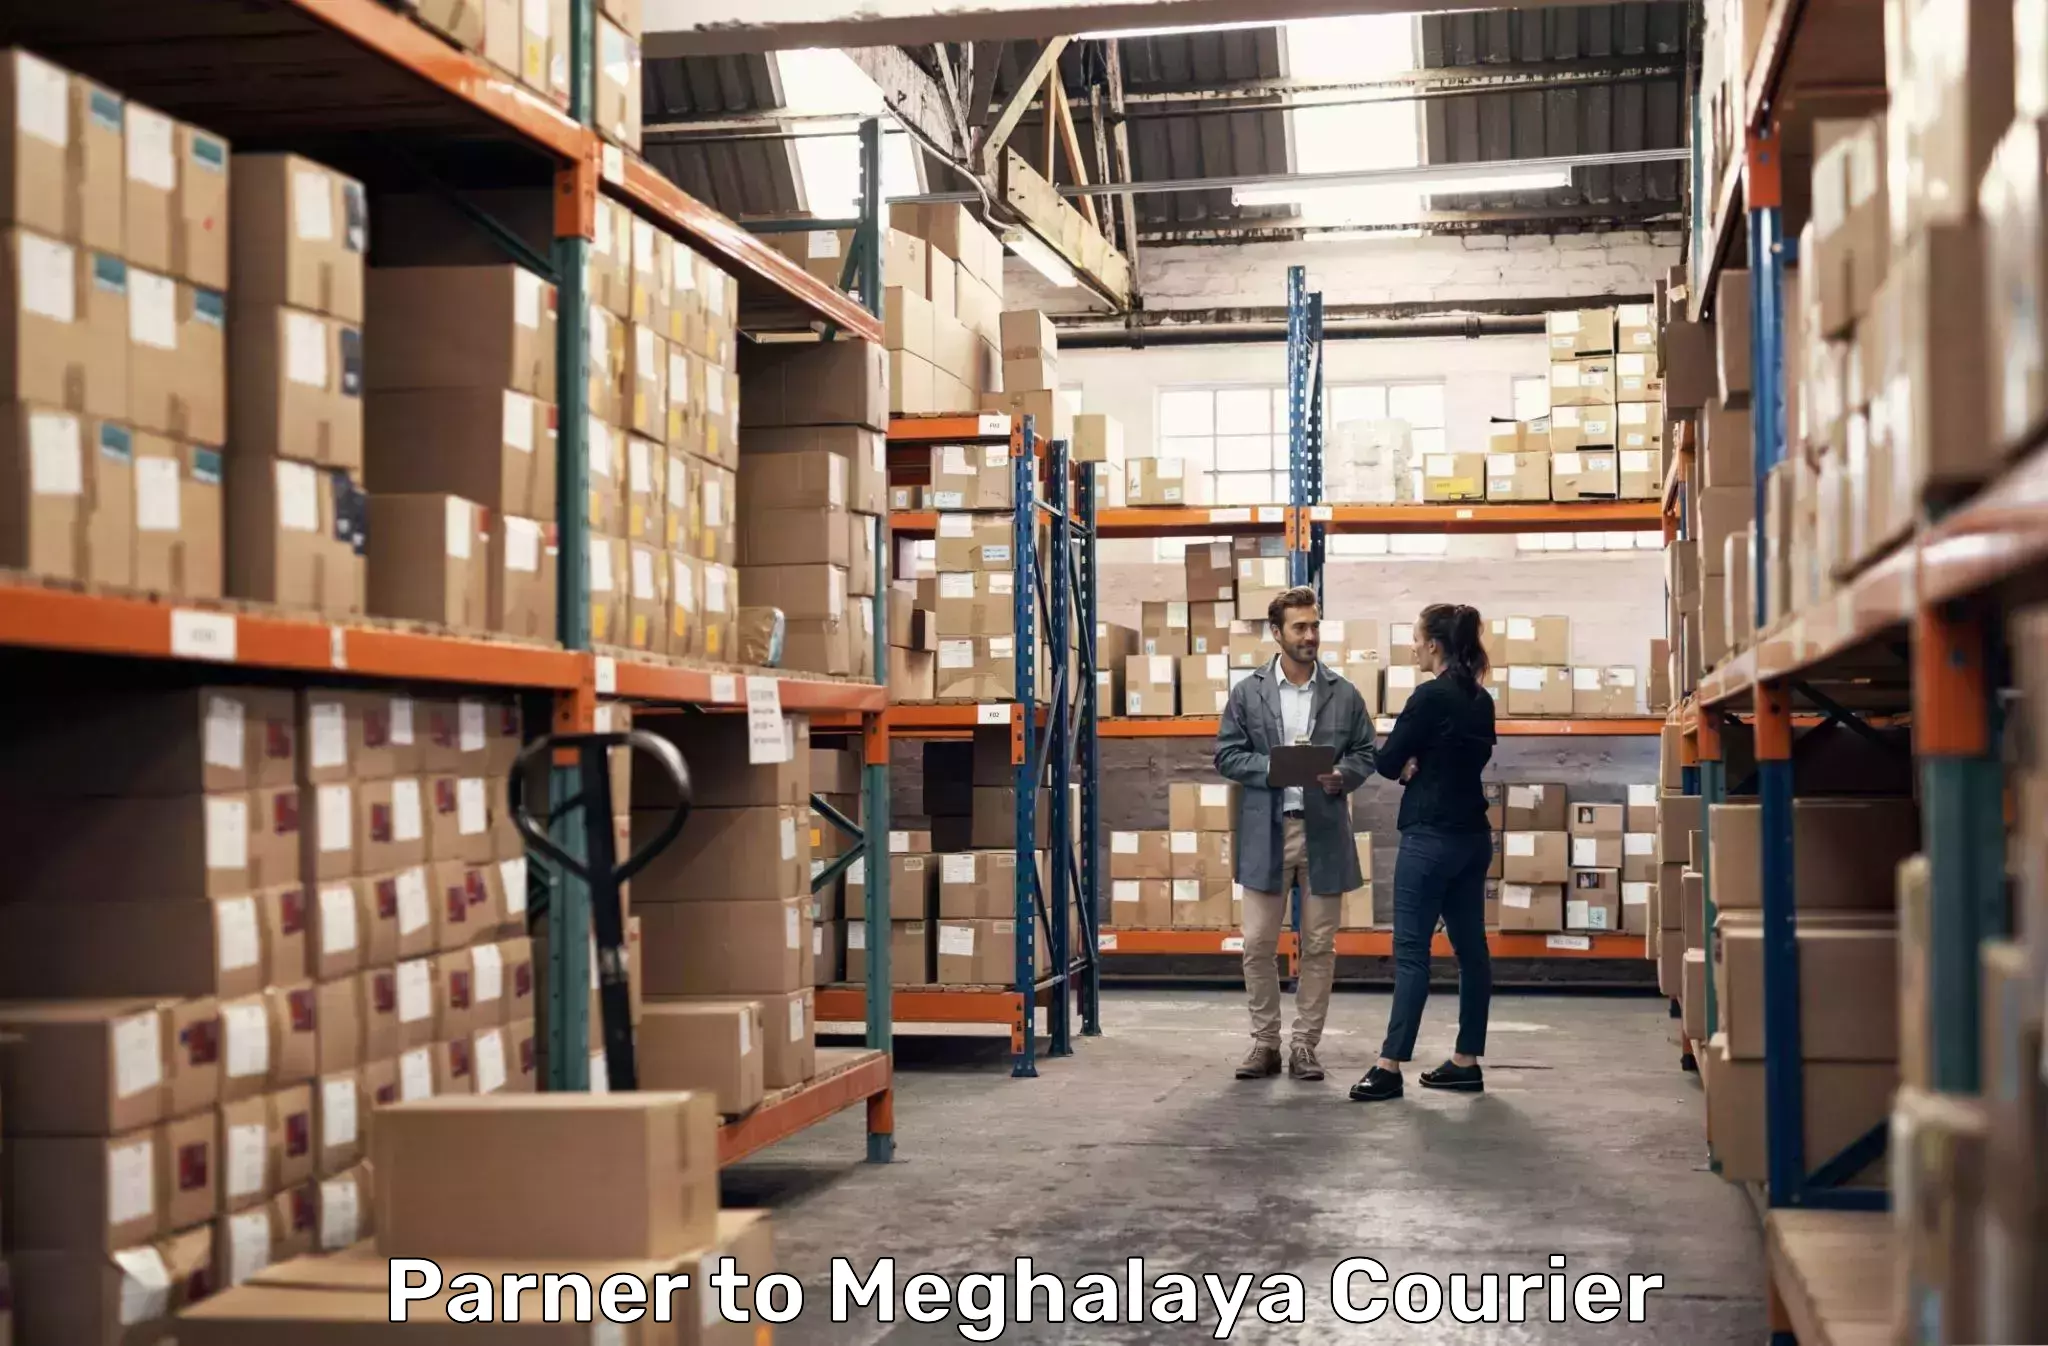 Customer-focused courier Parner to Meghalaya